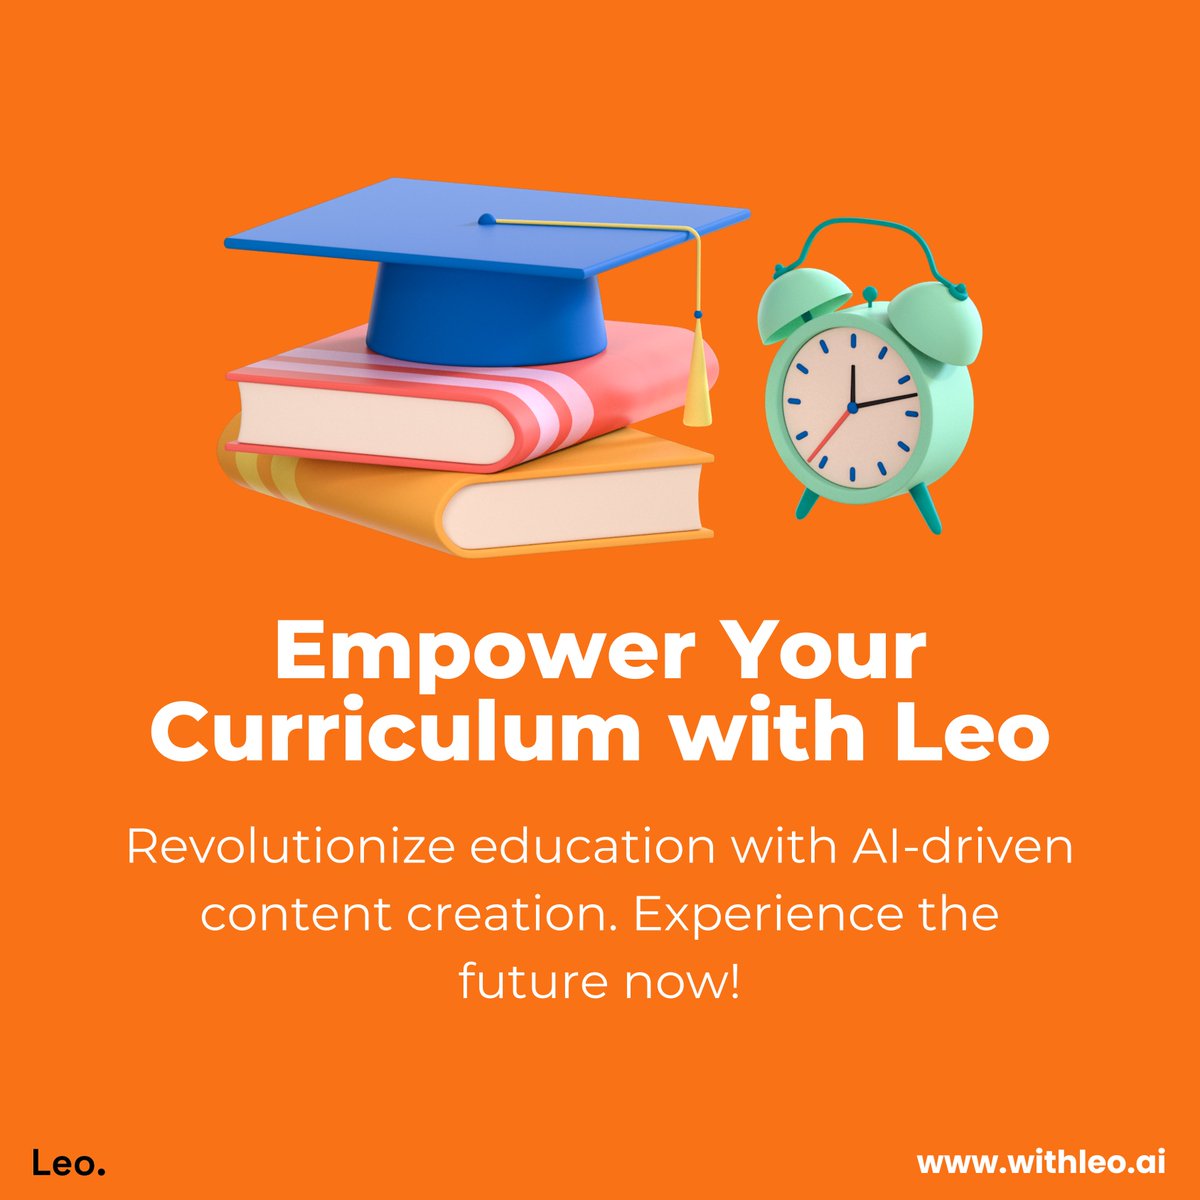 Leo: AI companion for curriculum development, crafting dynamic, personalized educational content. Visit withleo.ai for more.

#AI #edtech #education #teaching #AIinEducation #TeacherTools #TeachingAssistants #EducationalAI